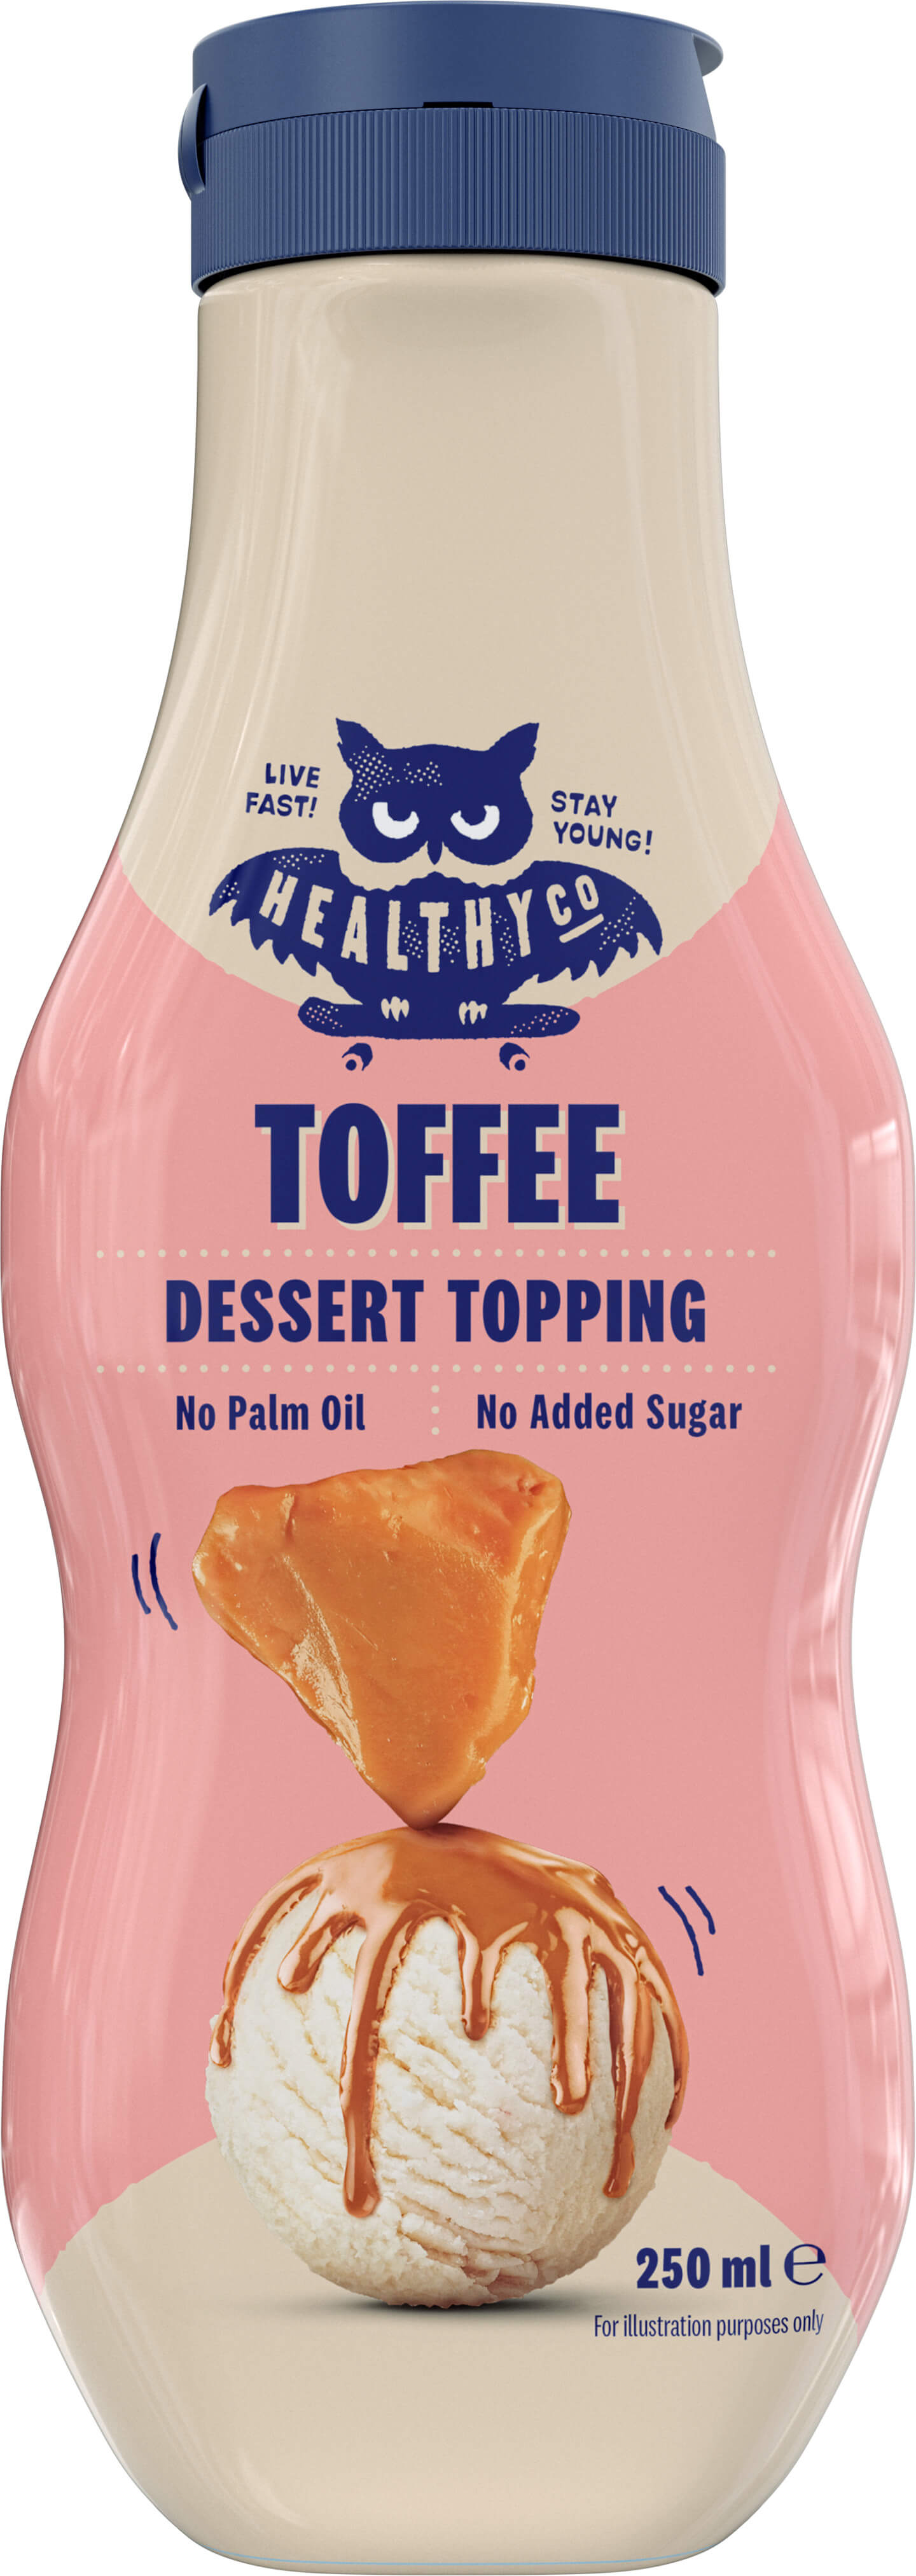 Zobrazit detail výrobku HealthyCo Dessert Topping 250 ml - toffee